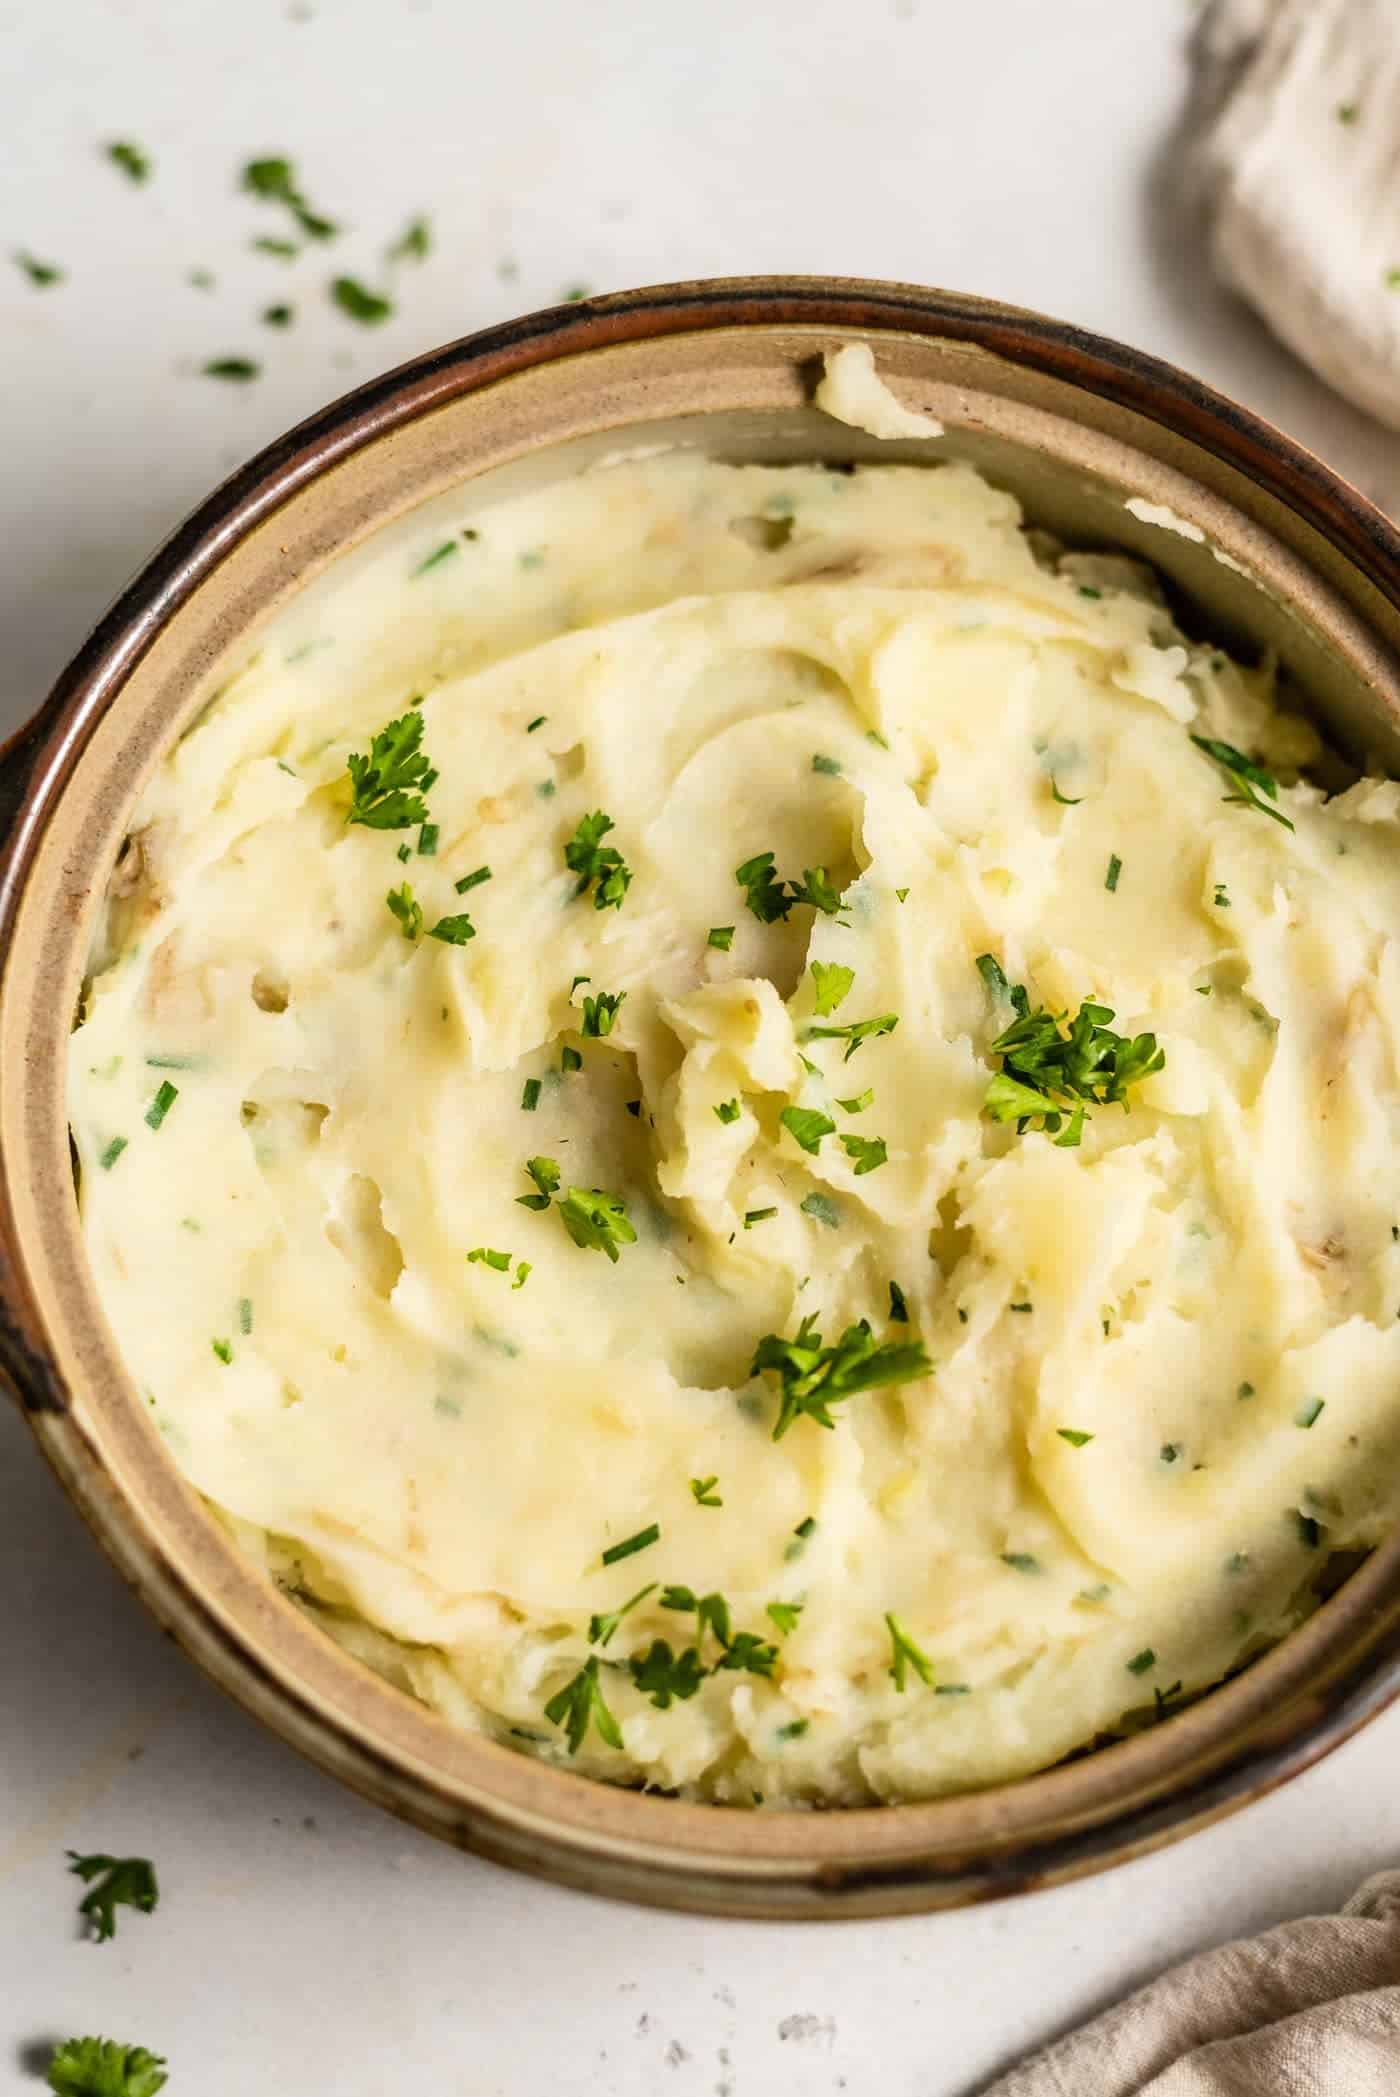 Healthy Vegan Mashed Potatoes